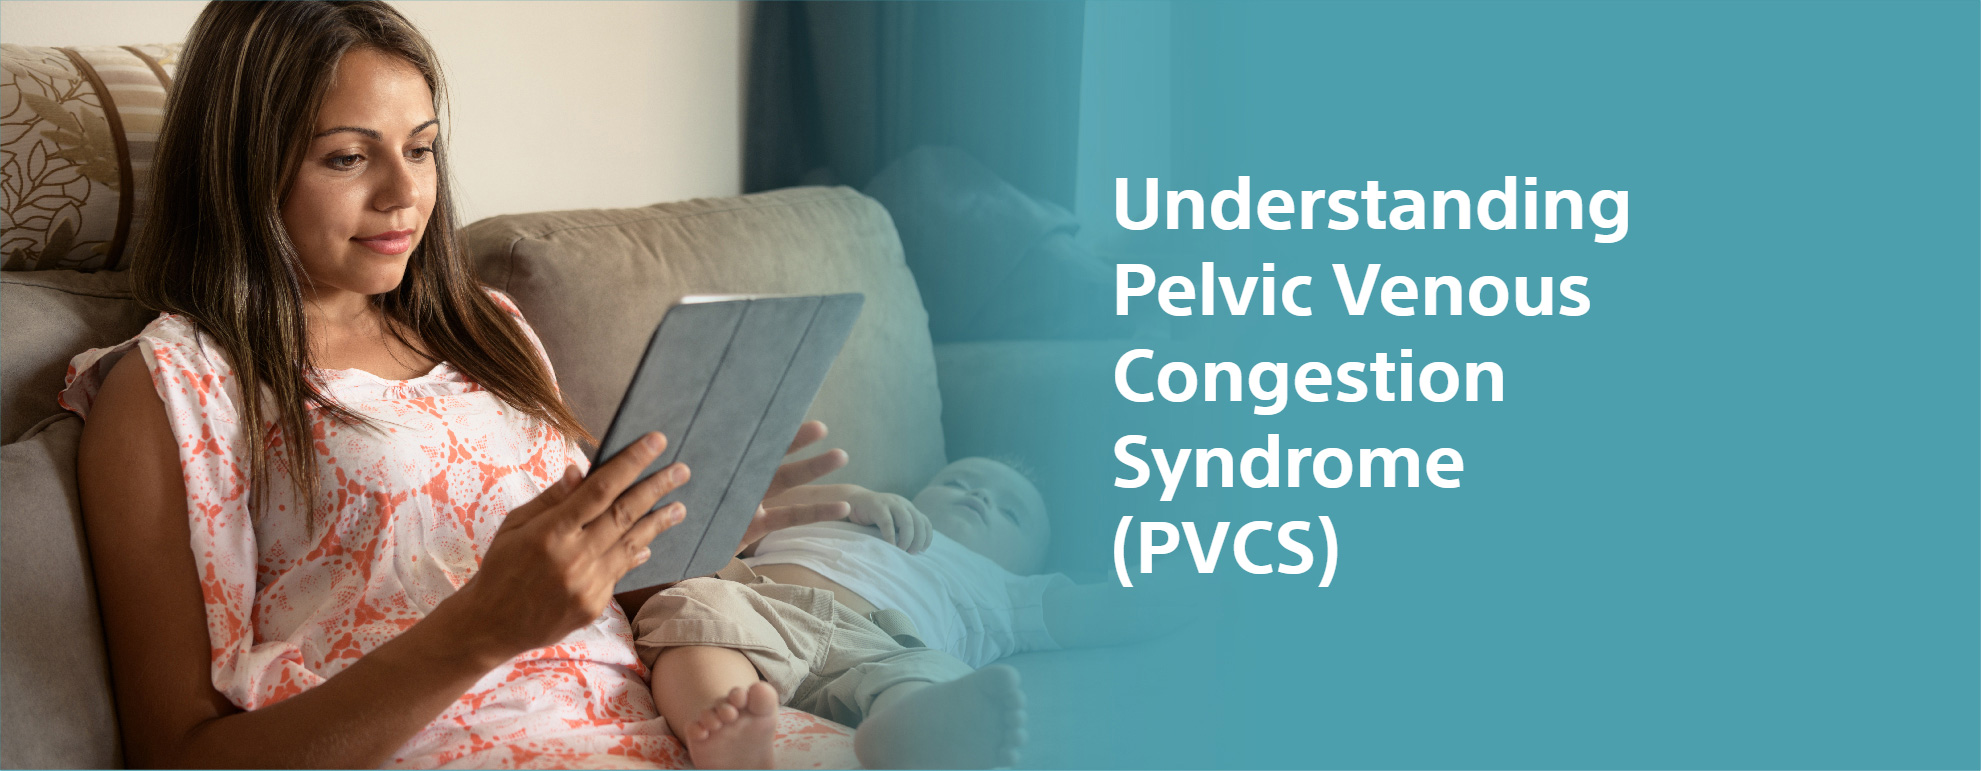 Understanding Pelvic Venous Congestion Syndrome